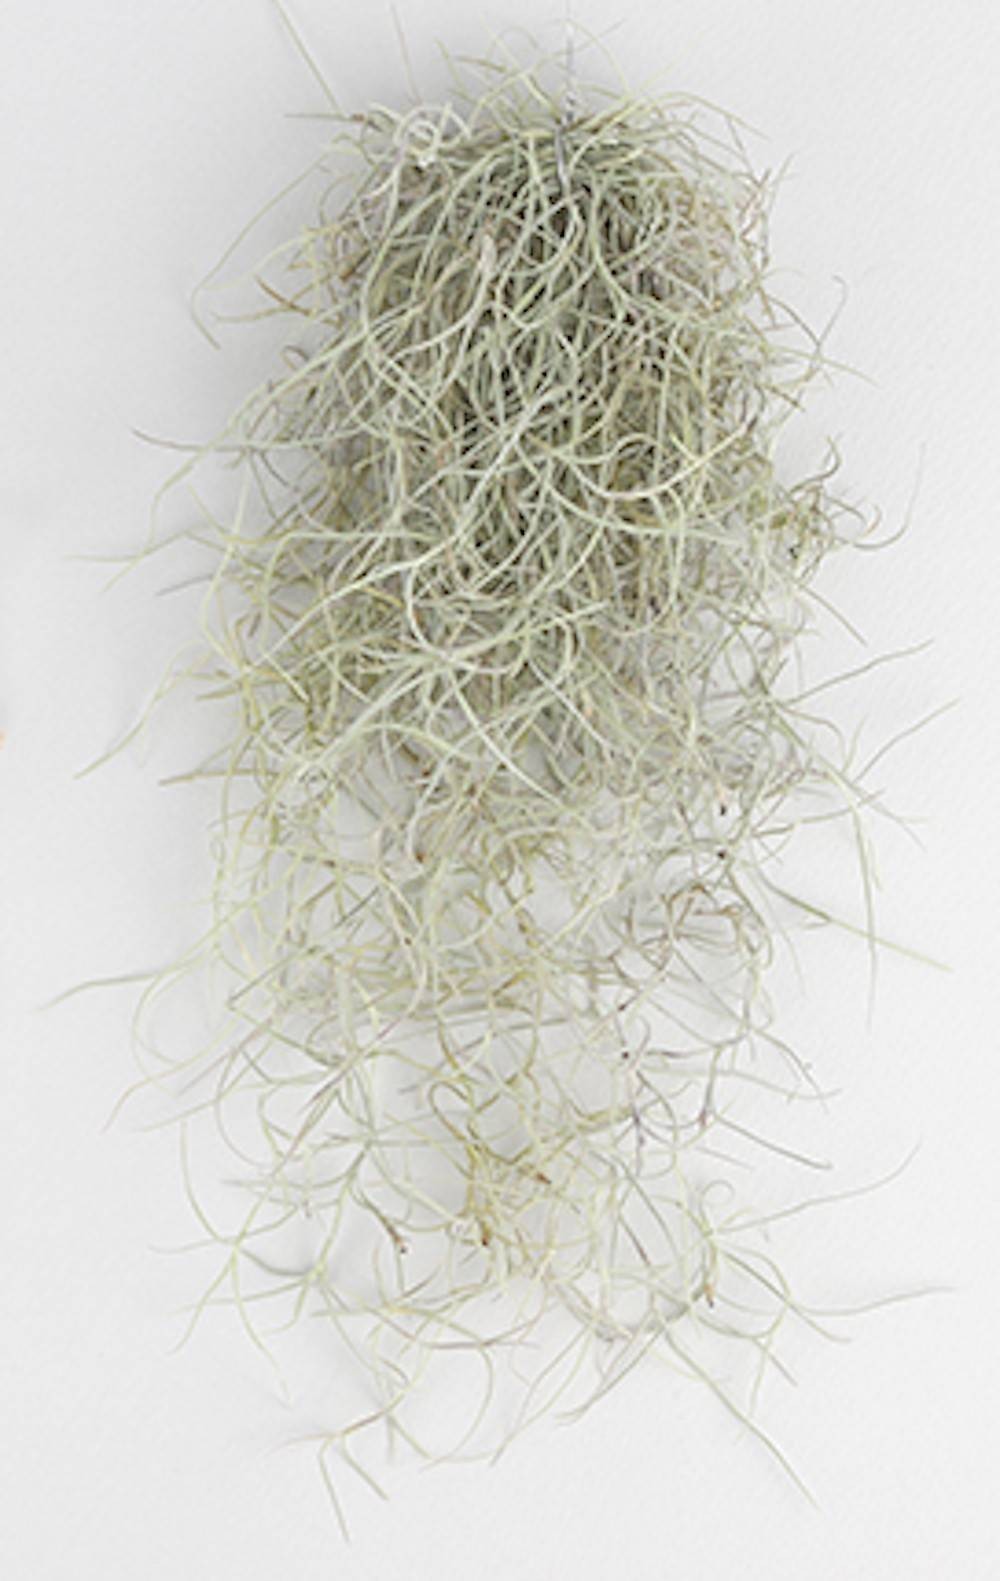 Tillandsia Usneoides, Spanish Moss ("Barba mosului")